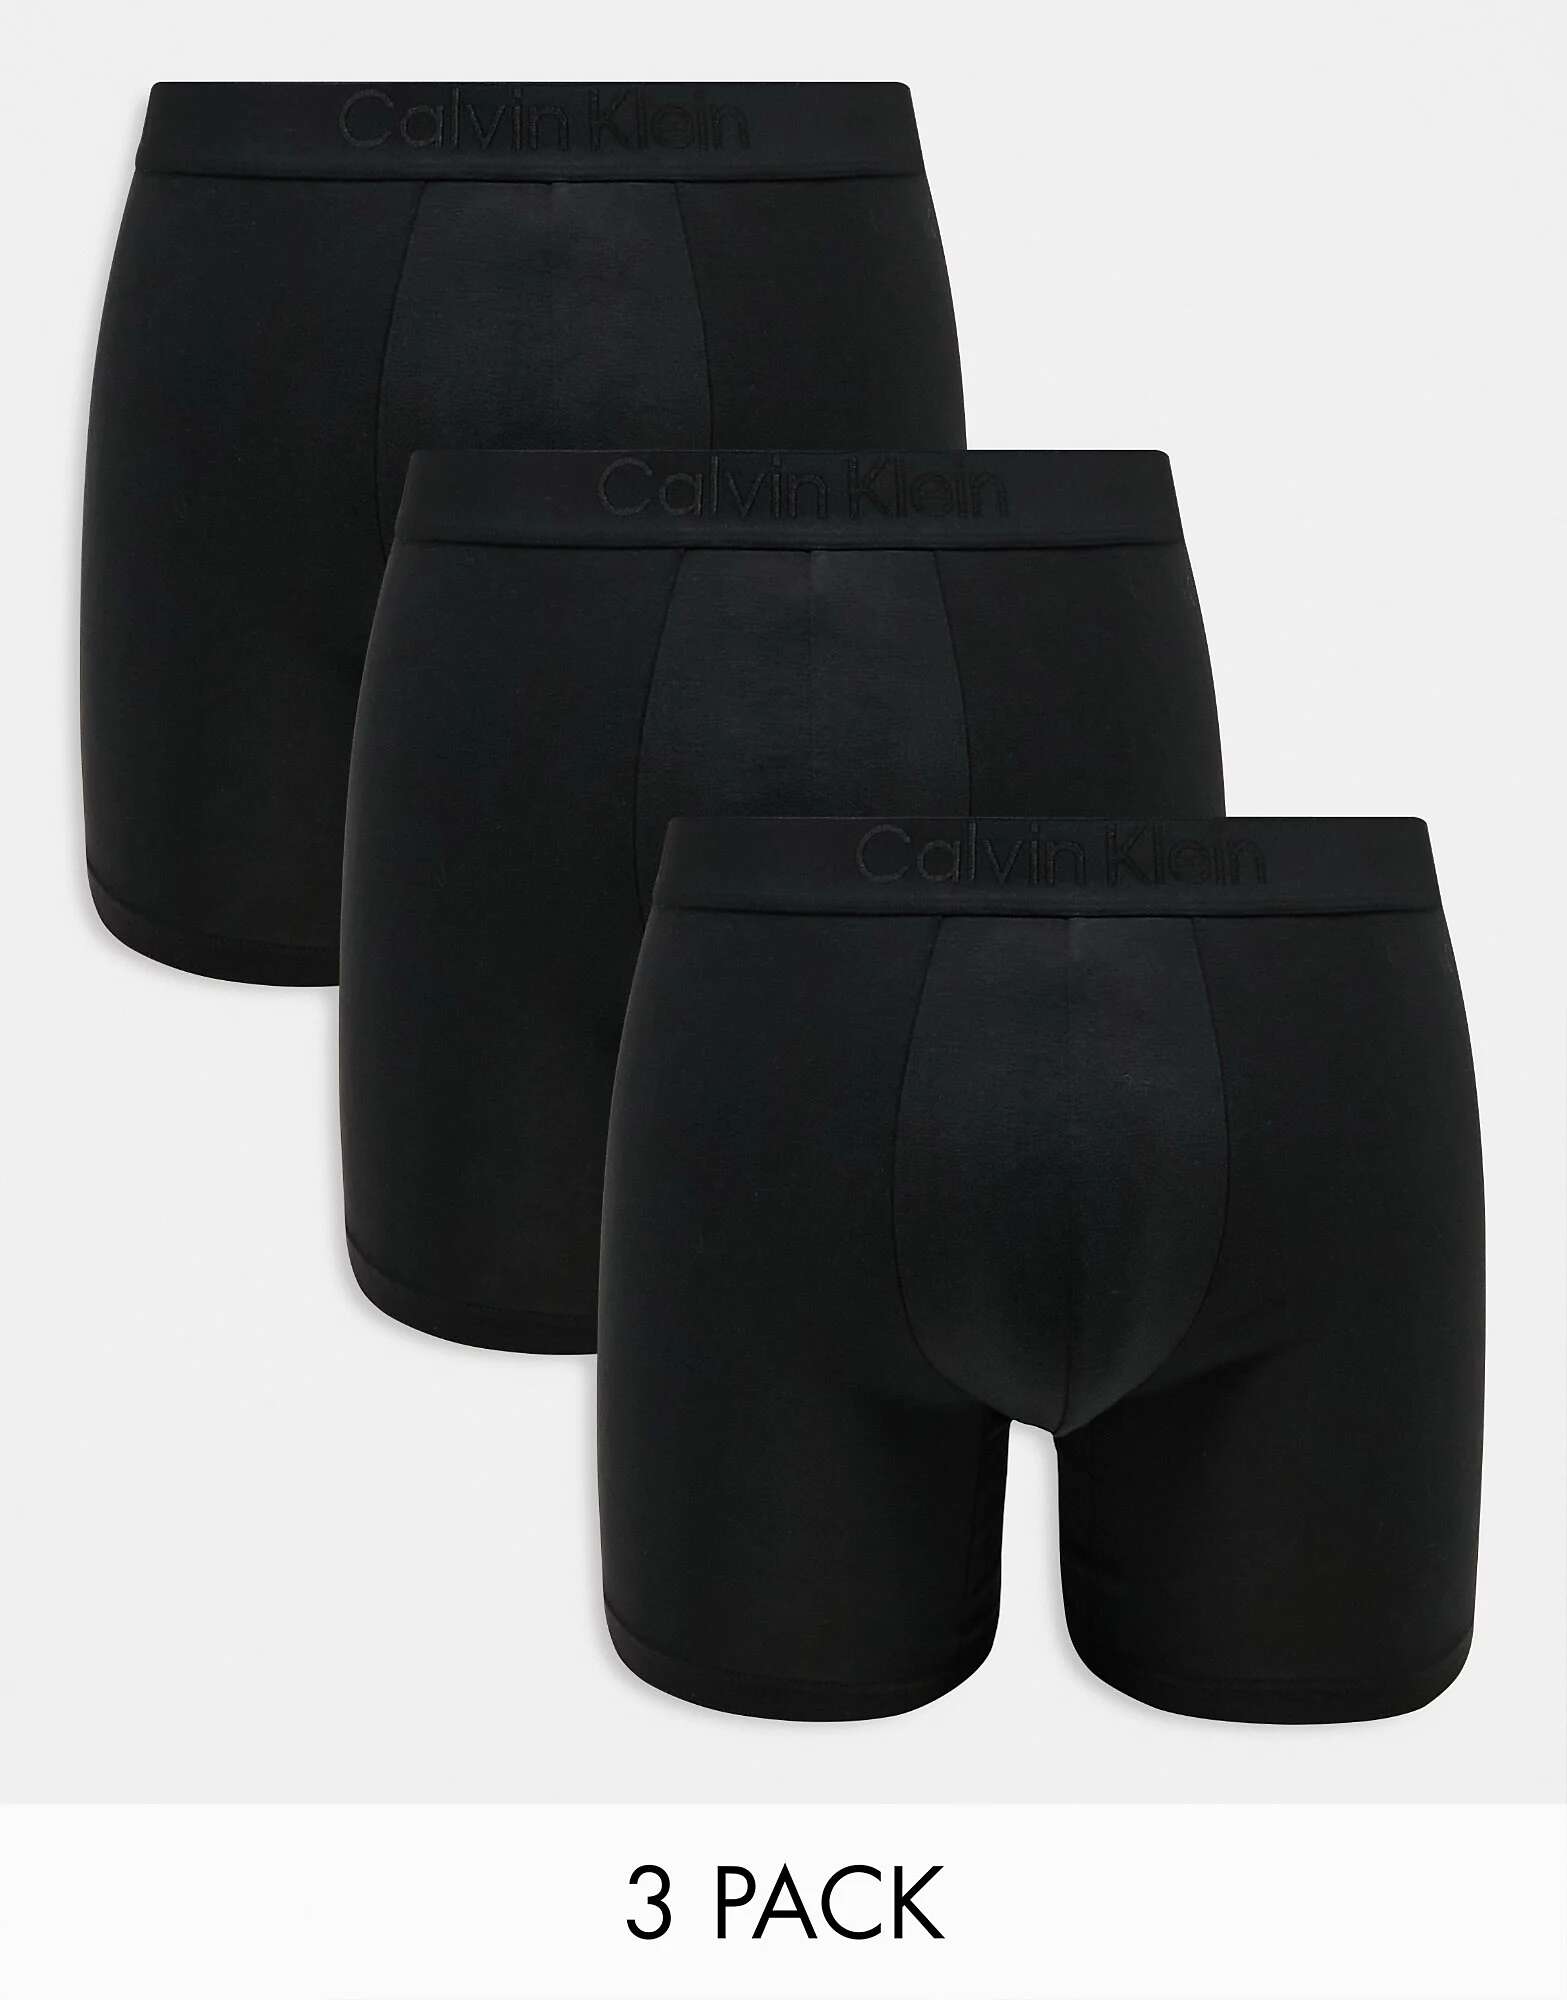 Черные трусы-боксеры из трех штук Calvin Klein CK Black монтировка набор из трех штук черные